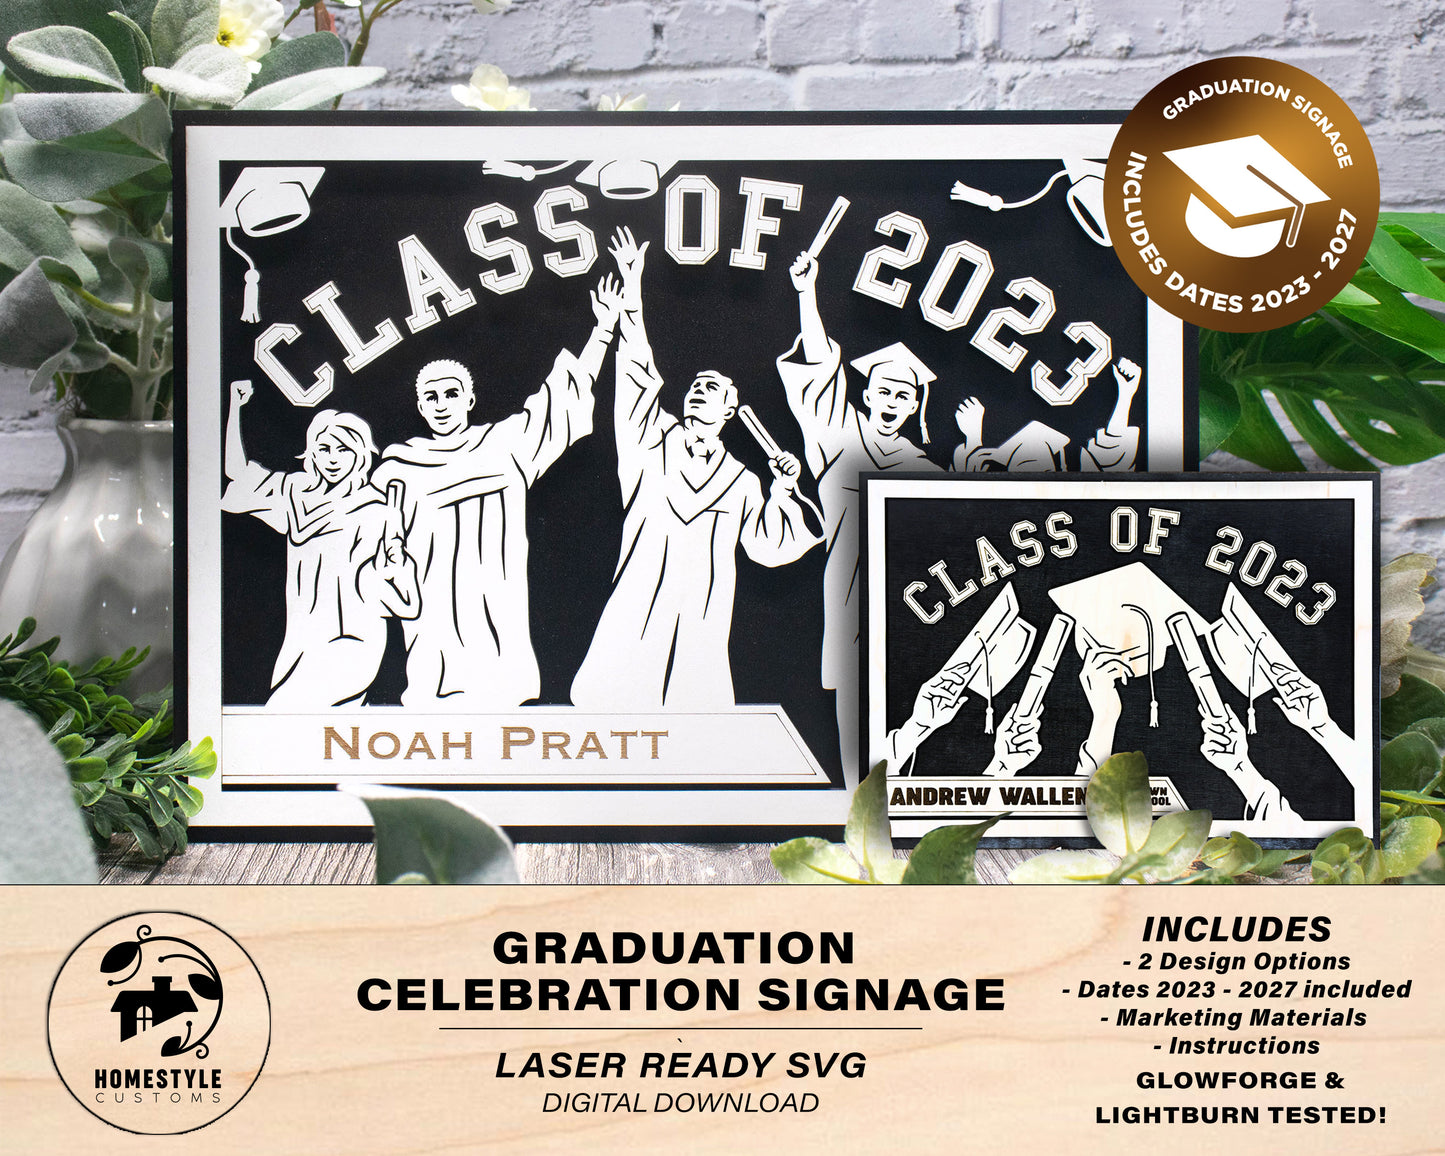 Graduation Celebration Signage  - 2 Design Options and Dates 2023-2027 included - SVG File Download - Glowforge & Lightburn Tested